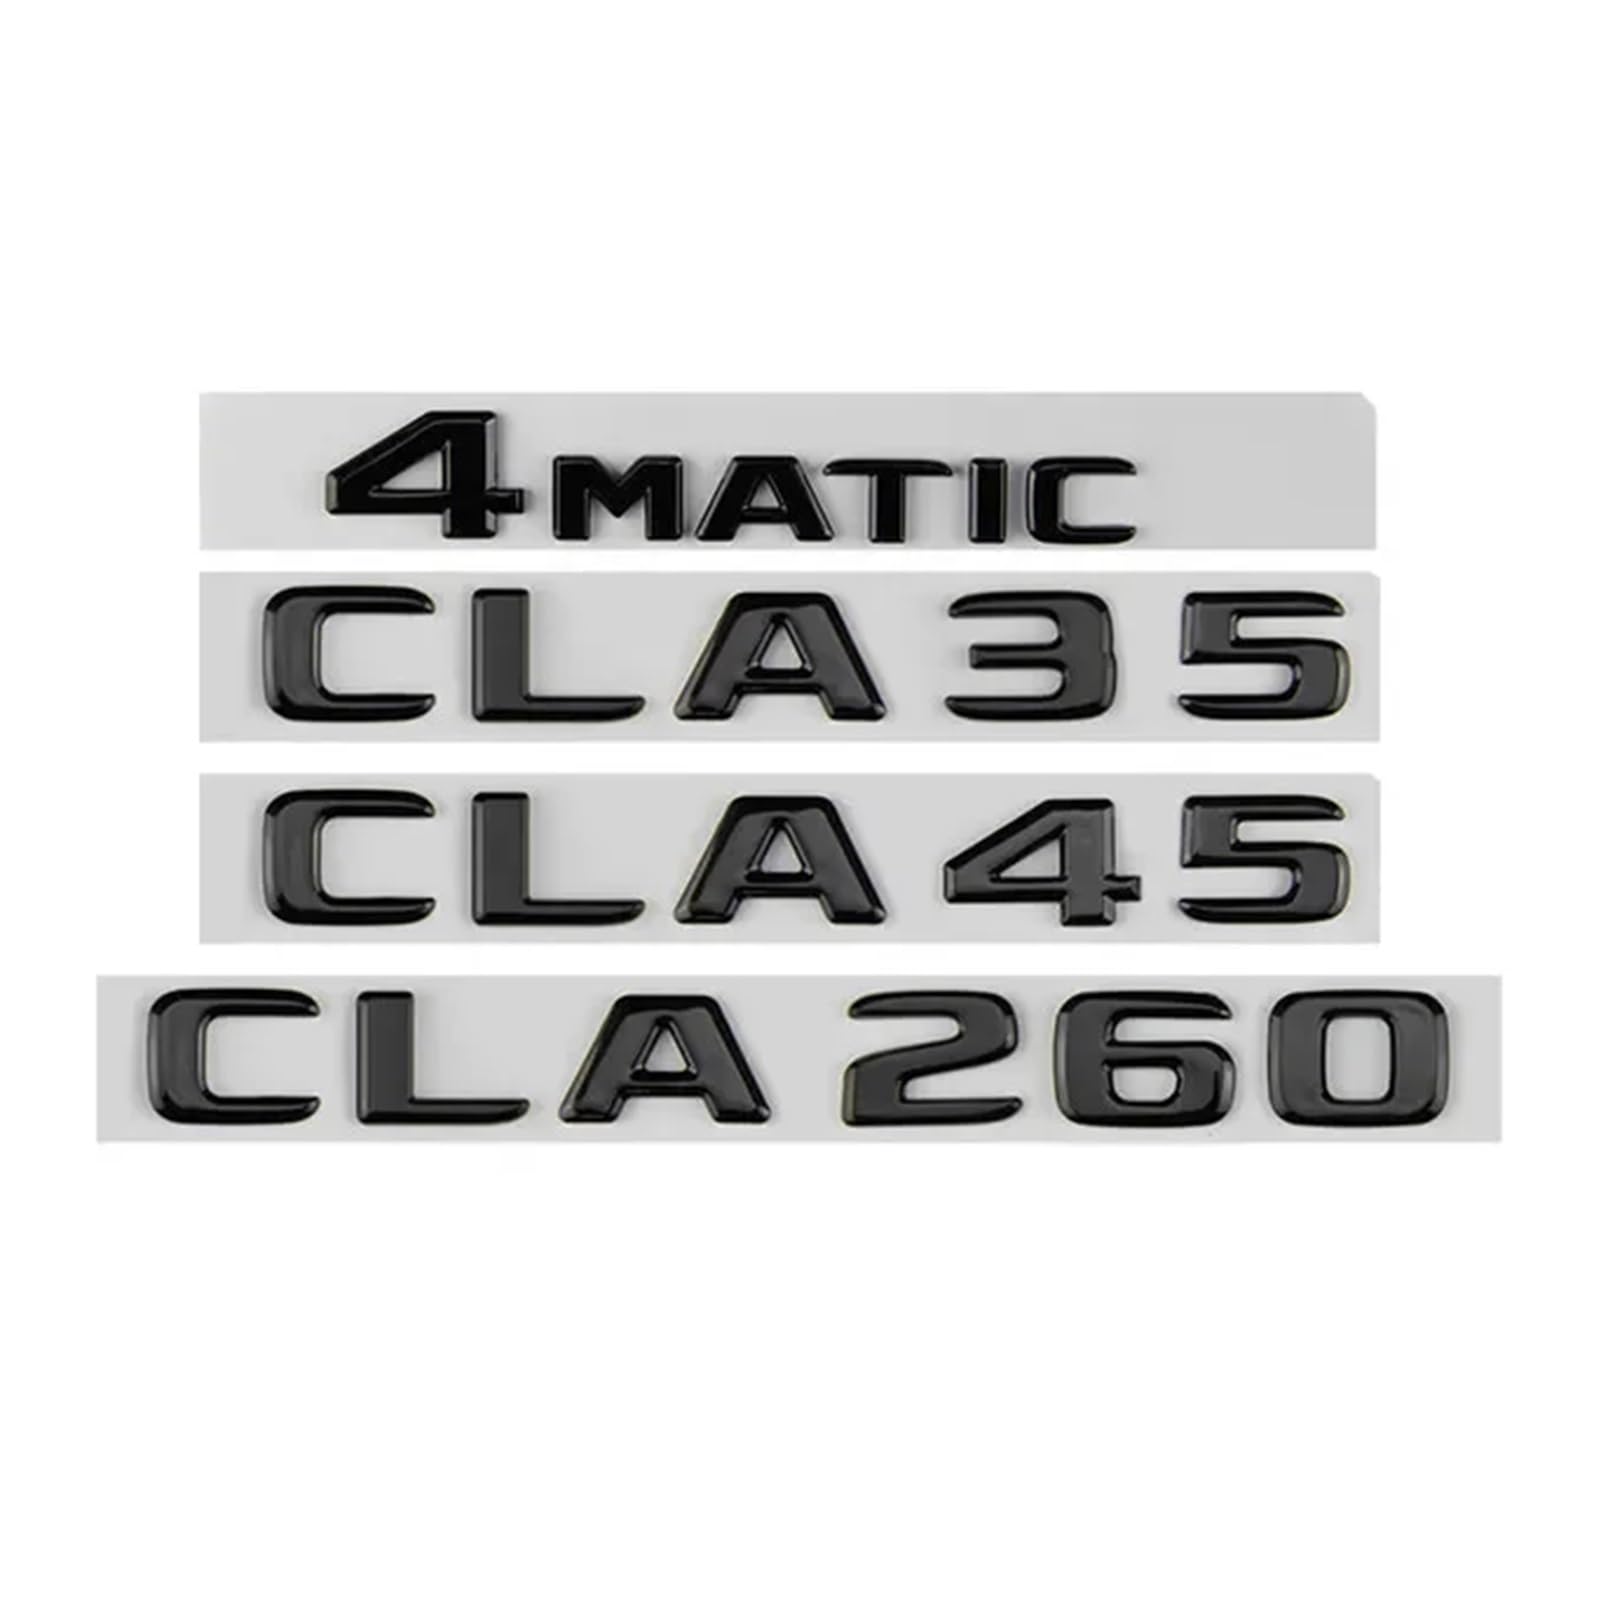 ALMVIS Auto-hinterer Kofferraum-Abzeichen-Aufkleber, Logo, CLA35, CLA45, CLA180d, CLA200, CLA220d, CLA260, Turbo, 4MATIC, Emblem, passend for Mercedes AMG C117 W117 C118 Auto-Logo-Aufkleber(Glossy Bla von ALMVIS